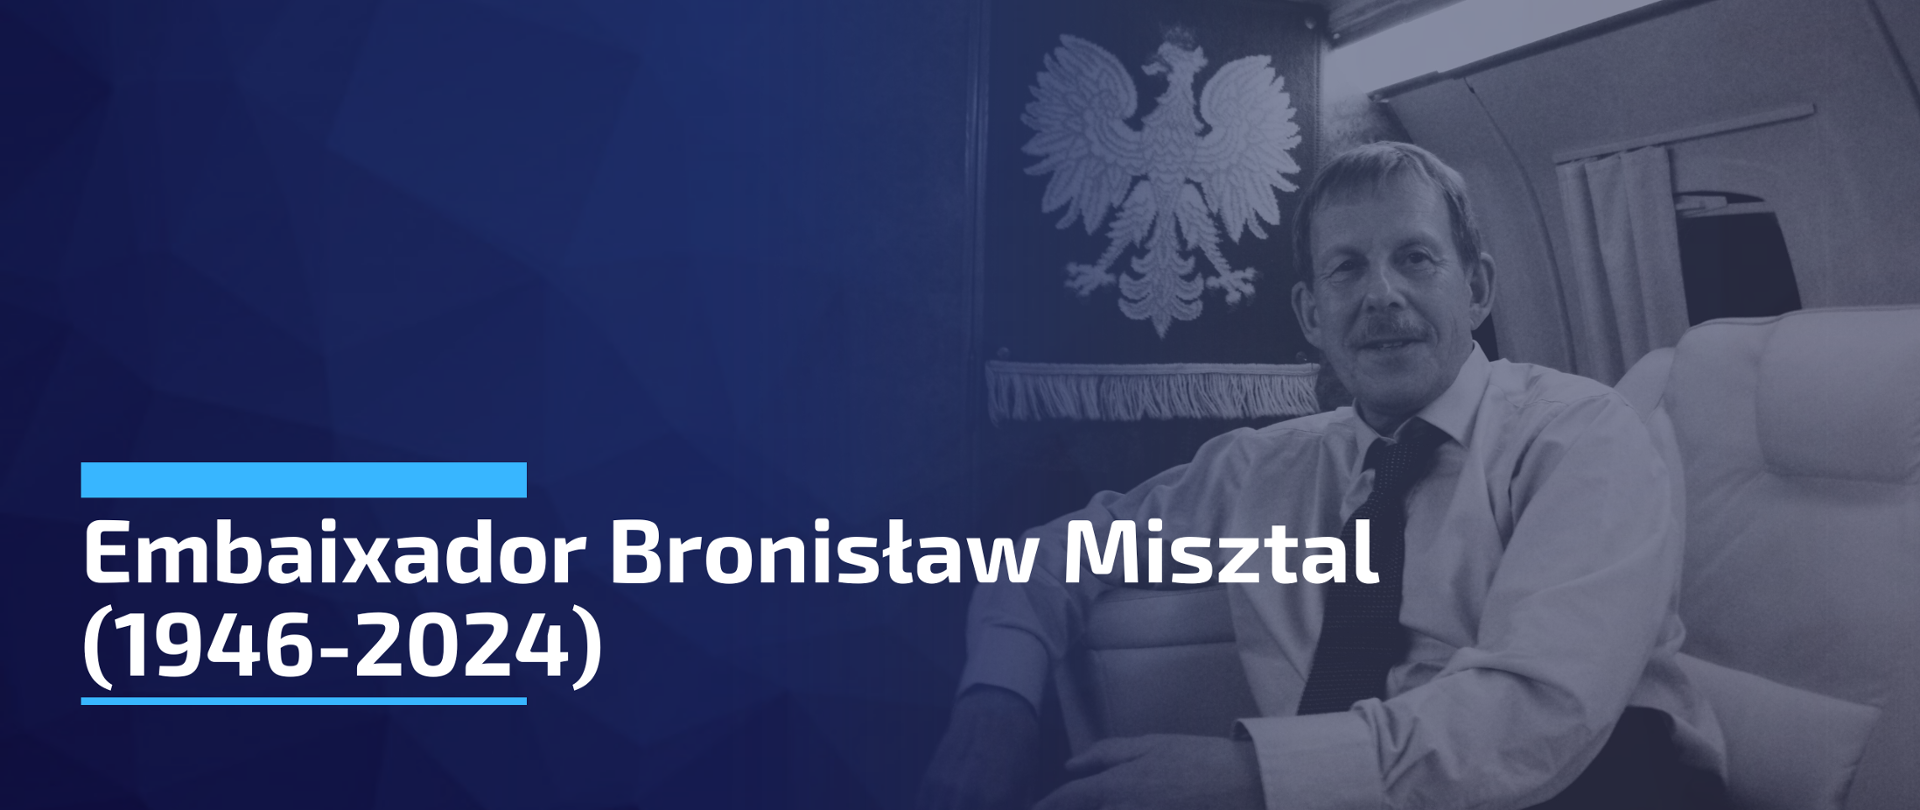 Embaixador Bronisław Misztal